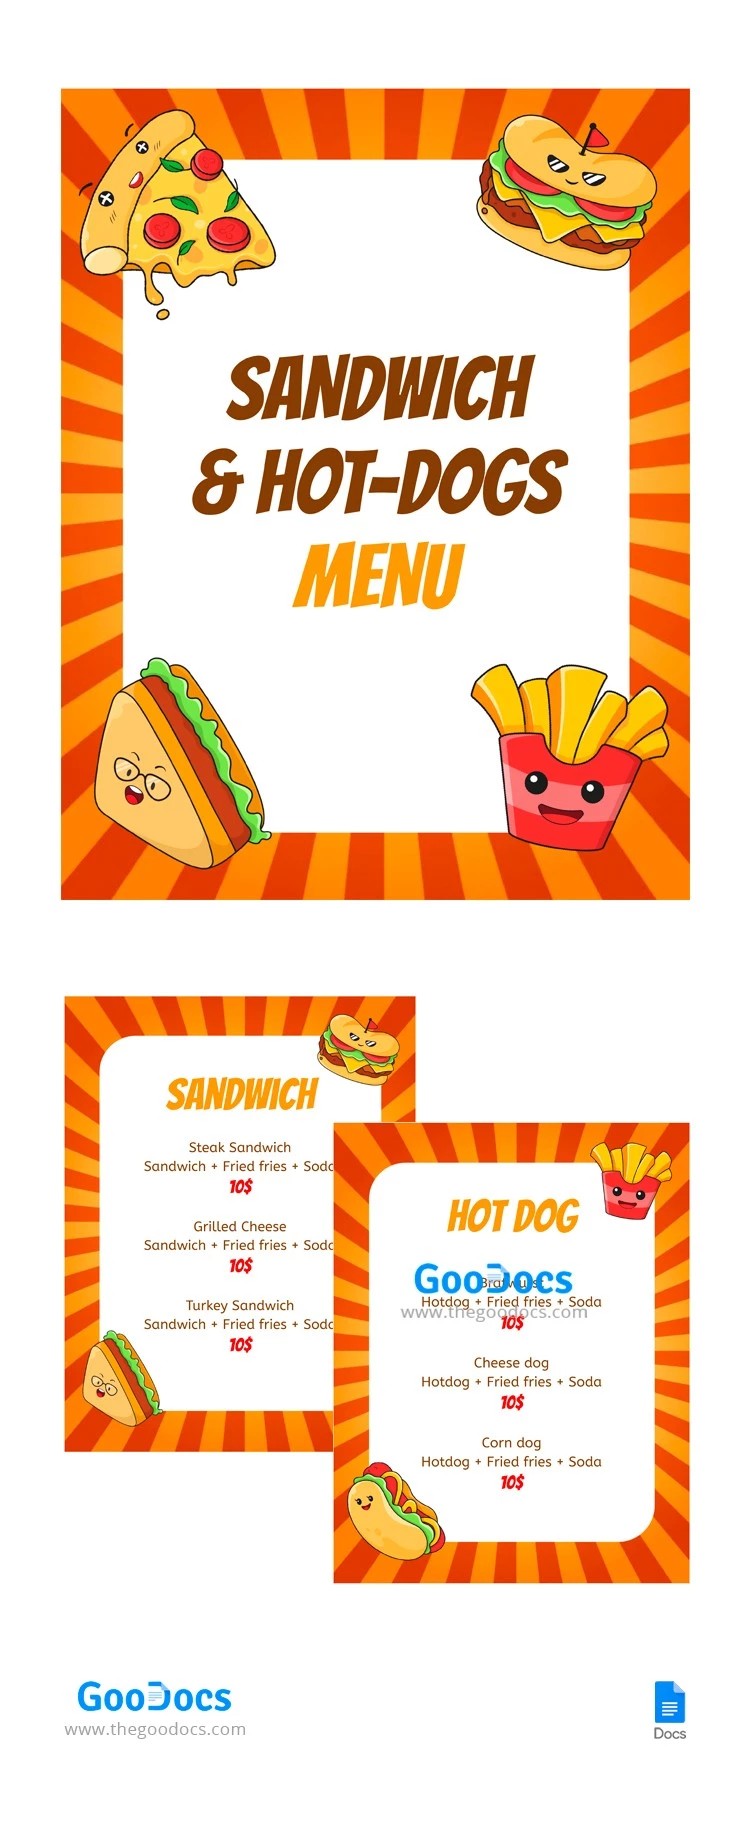 Cardápio de Sanduíches e Hot-Dogs - free Google Docs Template - 10064599